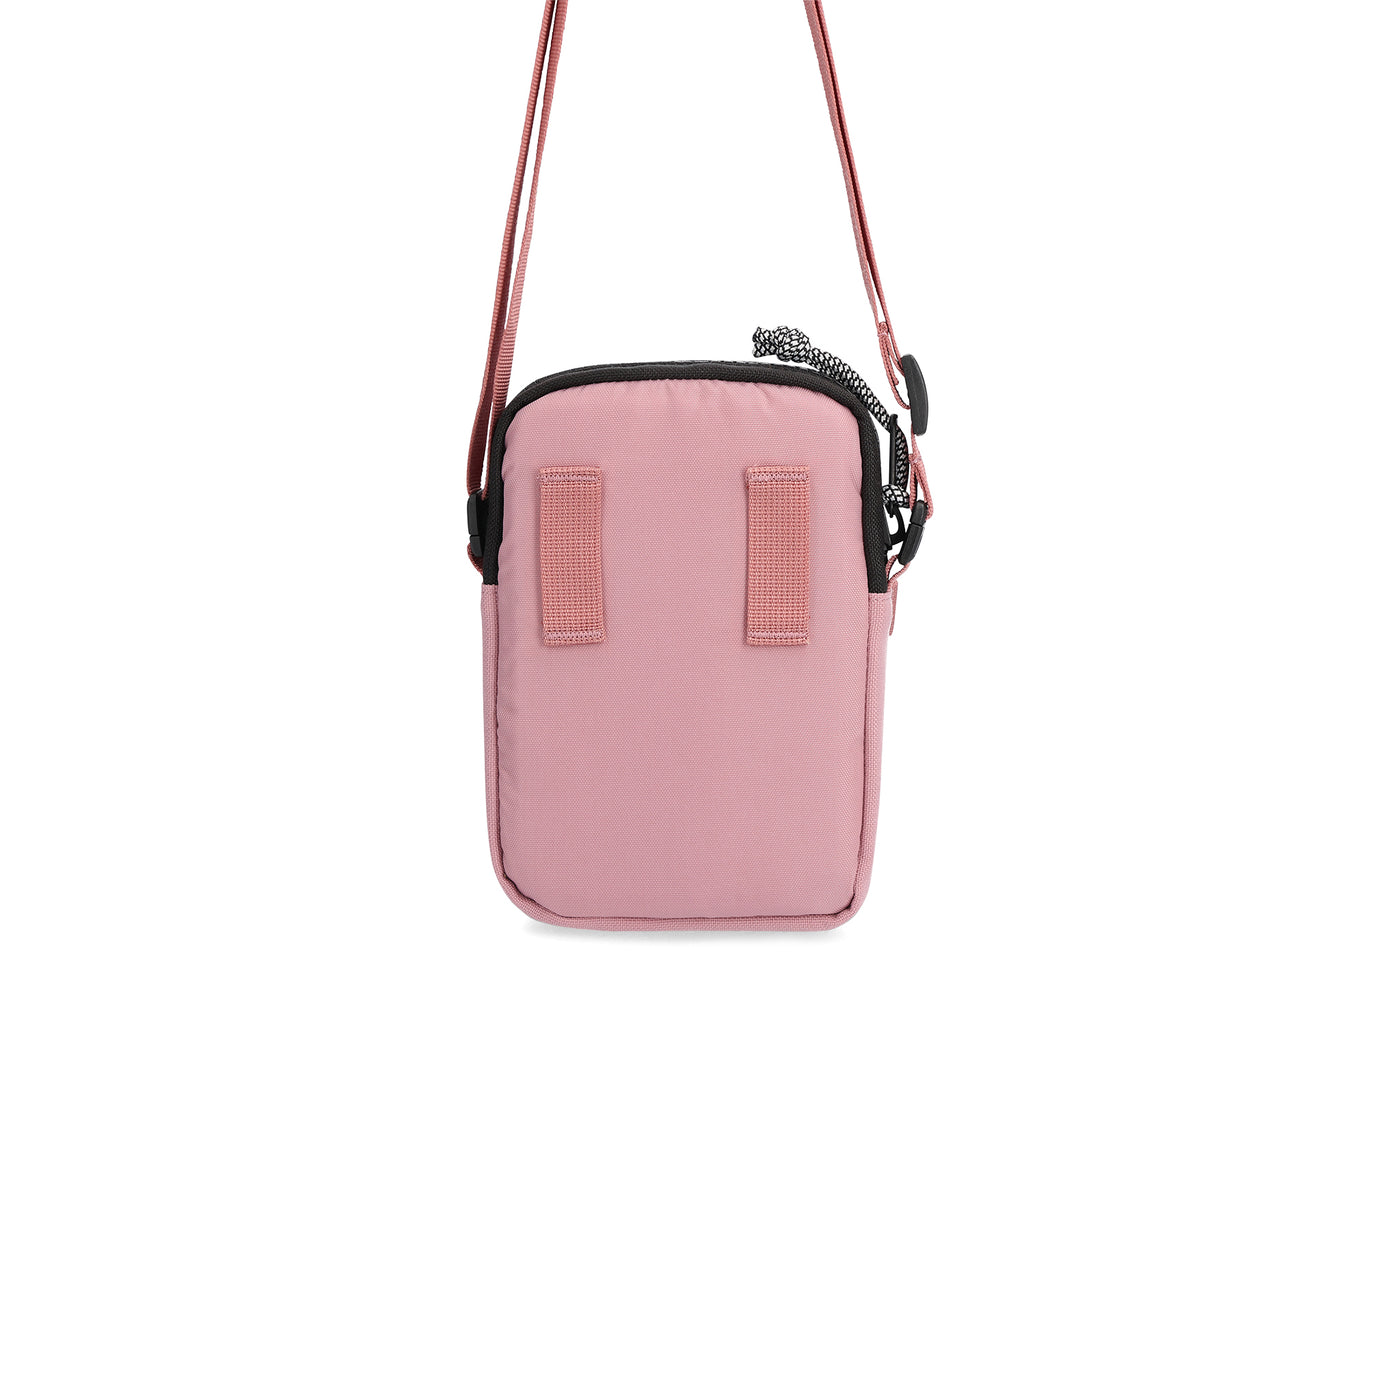 Sacoche Topo Designs Mini Shoulder Bag Rose